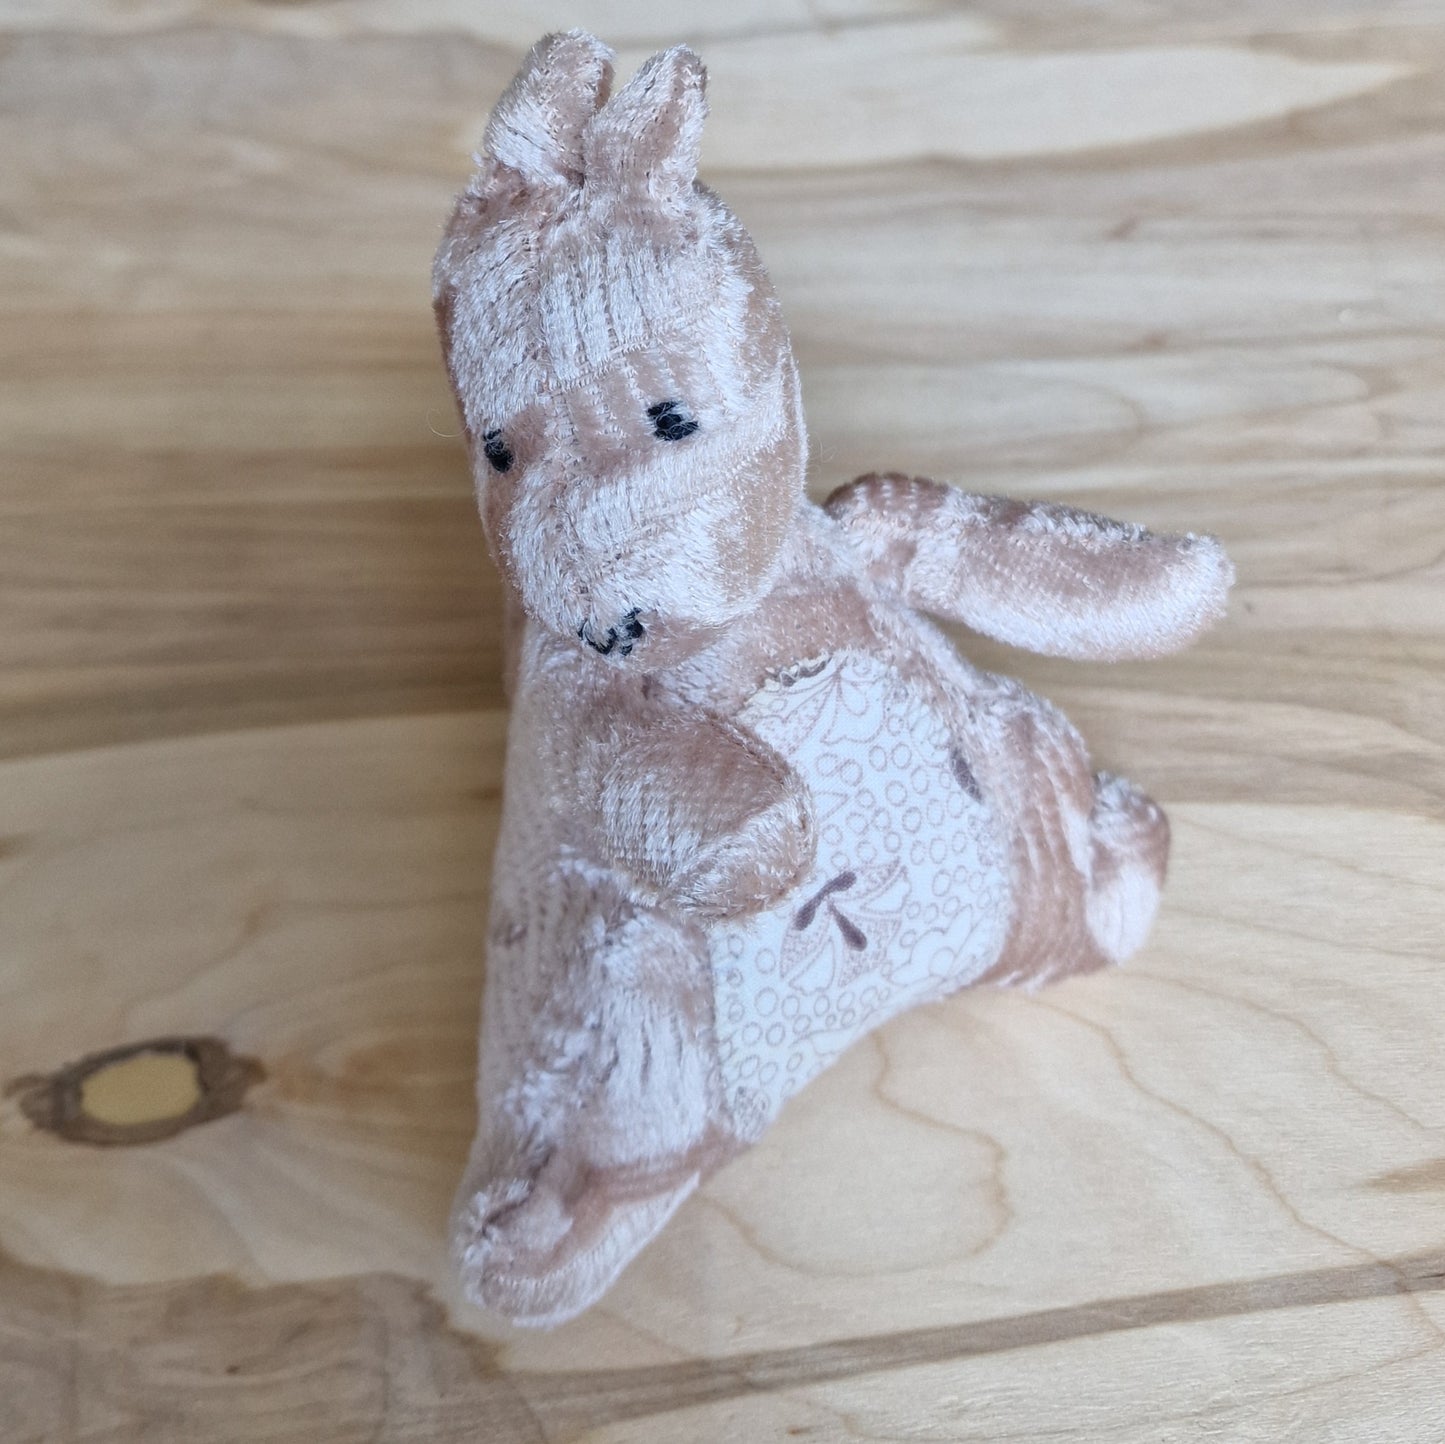 Hand-sewn fabric squirrel (VIER 2)